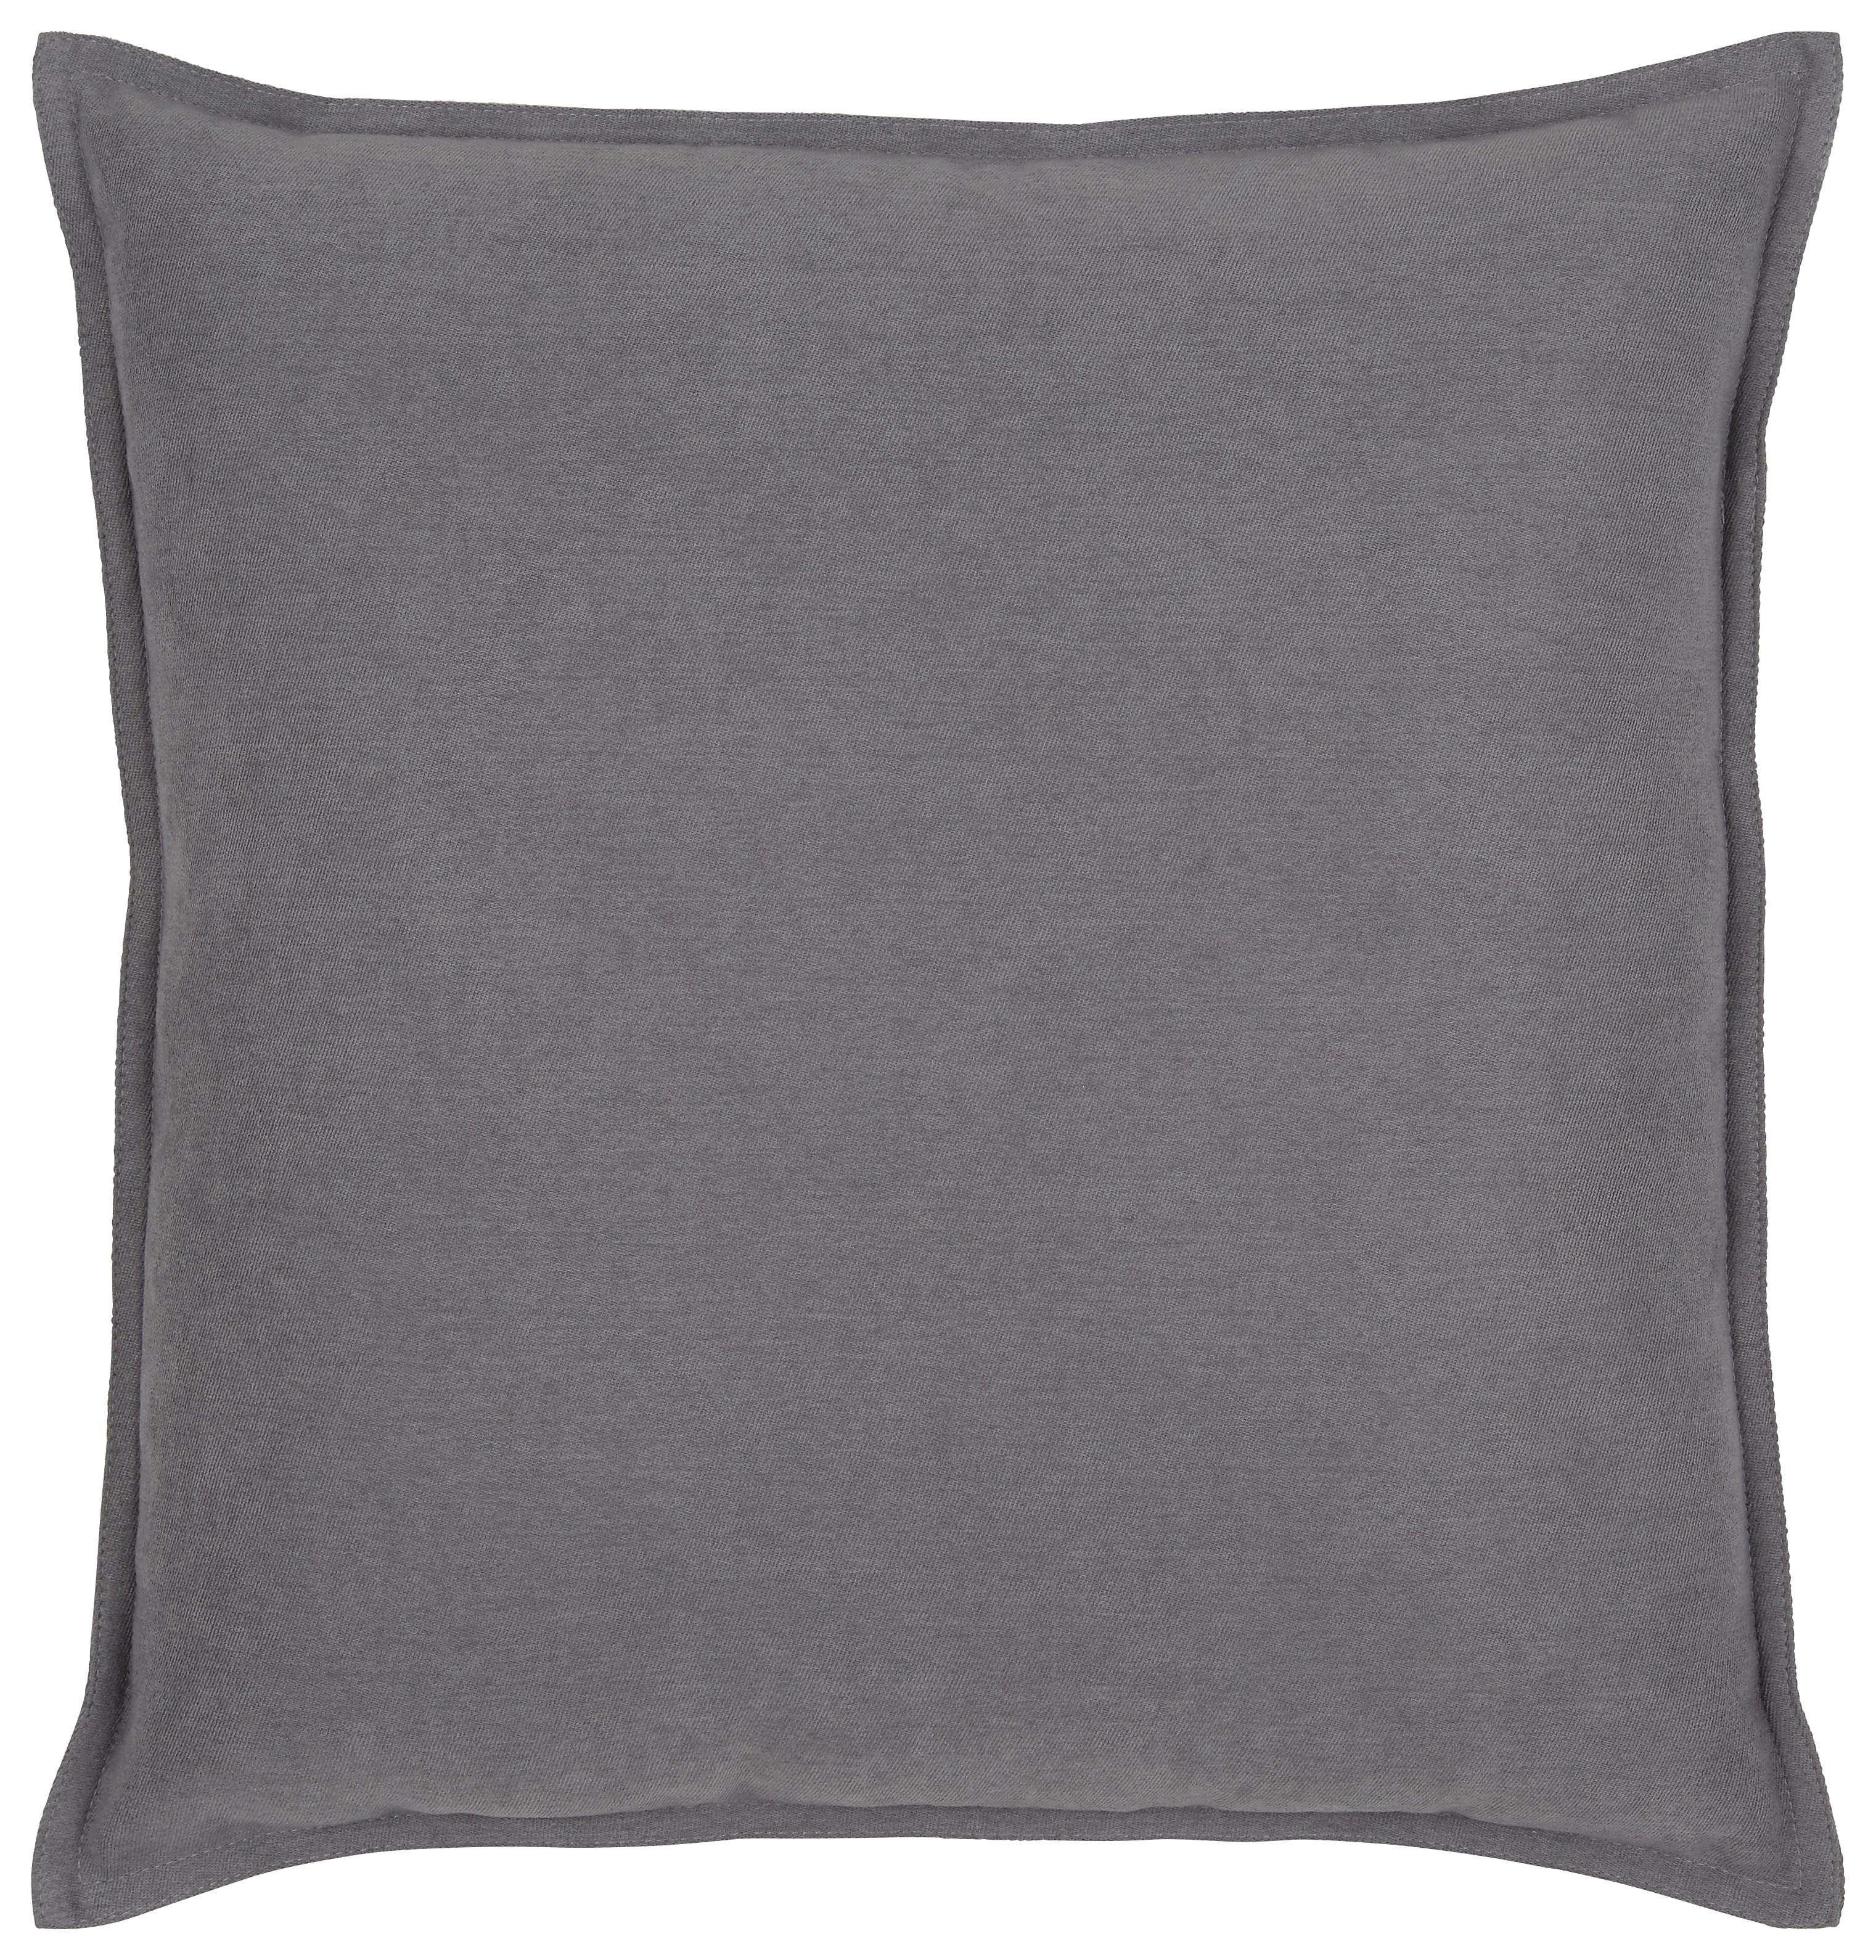 Zierkissen Poppy in Grau ca. 45x45cm - Grau, MODERN, Textil (45/45cm) - Modern Living